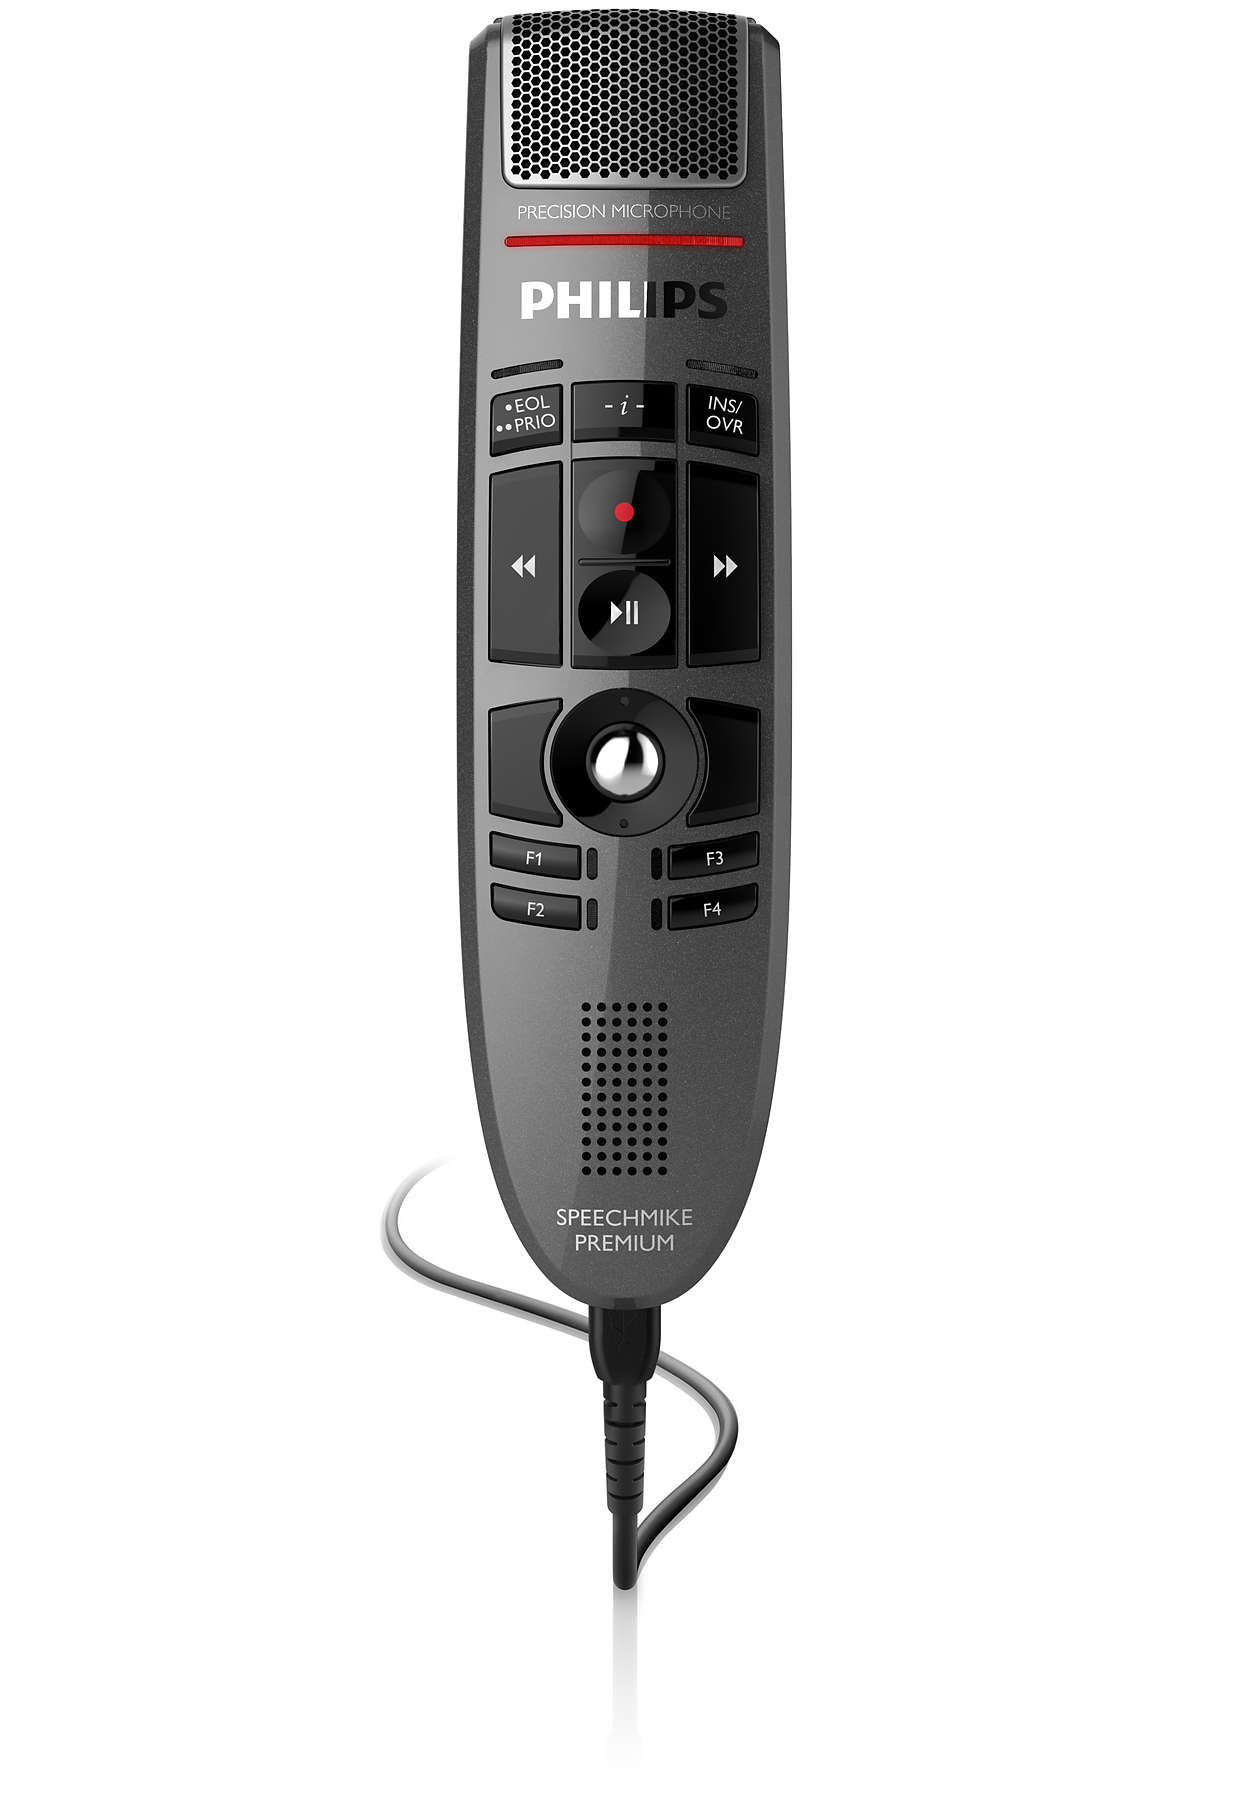 Philips Speech Mike Pro Plus Handheld Transcriber/Recorder Speech LFH5274/00 